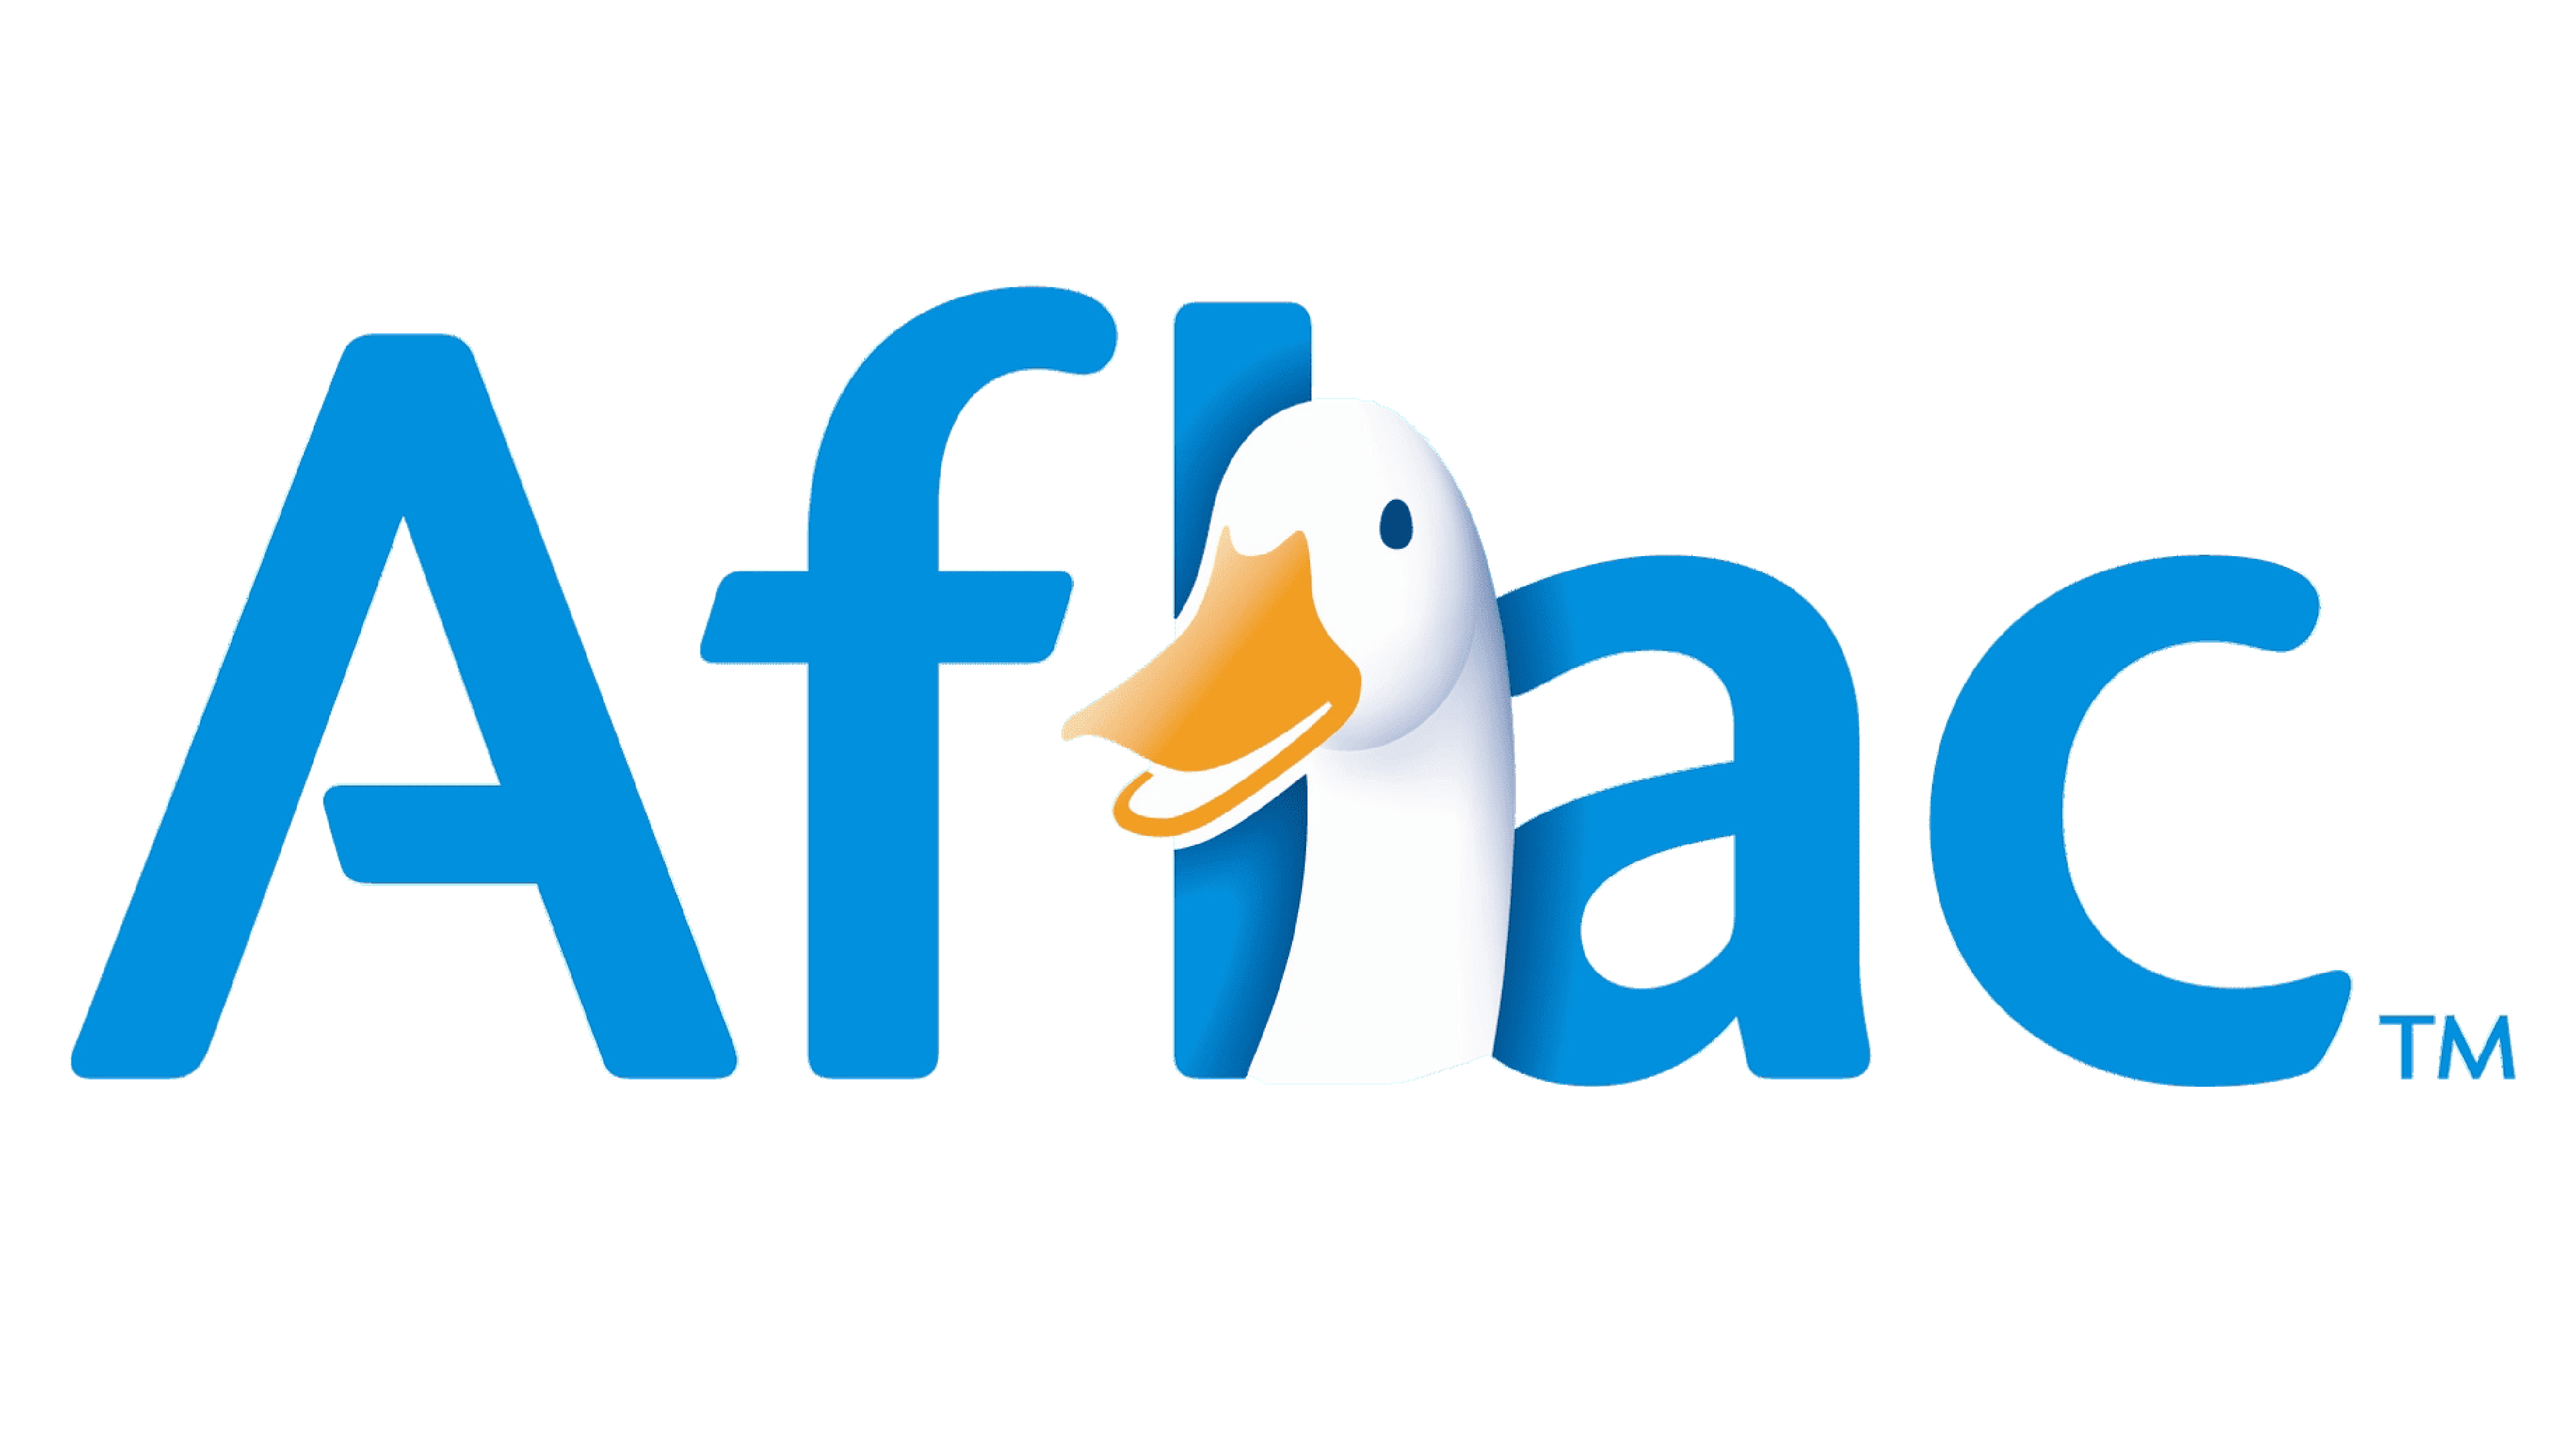 Aflac Logo Logo